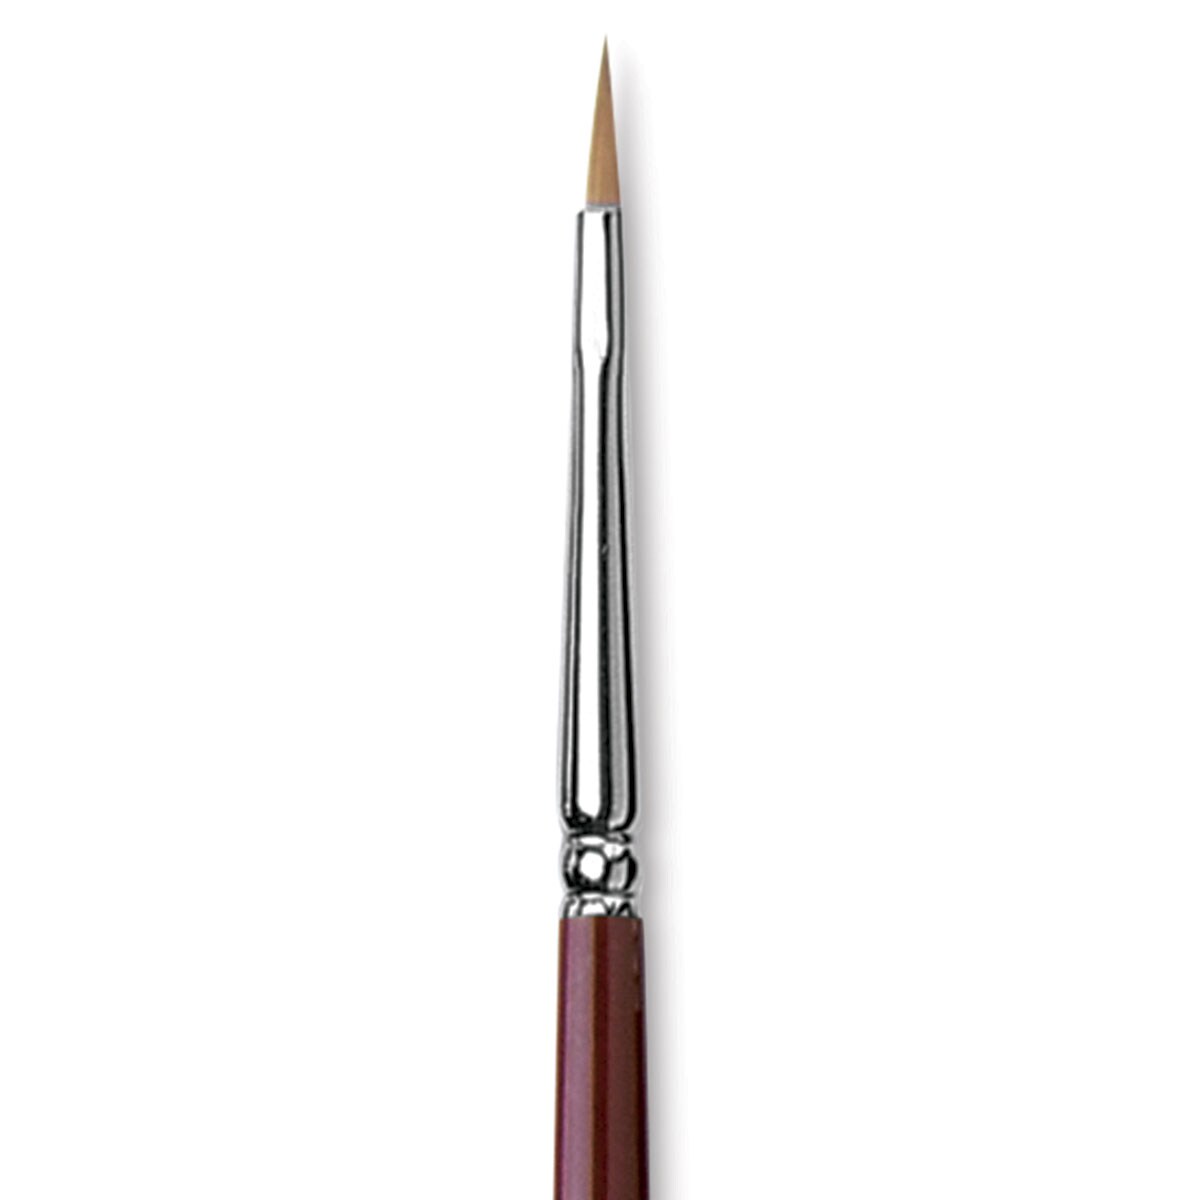 KOLINSKY SABLE Professional Oil Paint Brush Set Short 1115 R